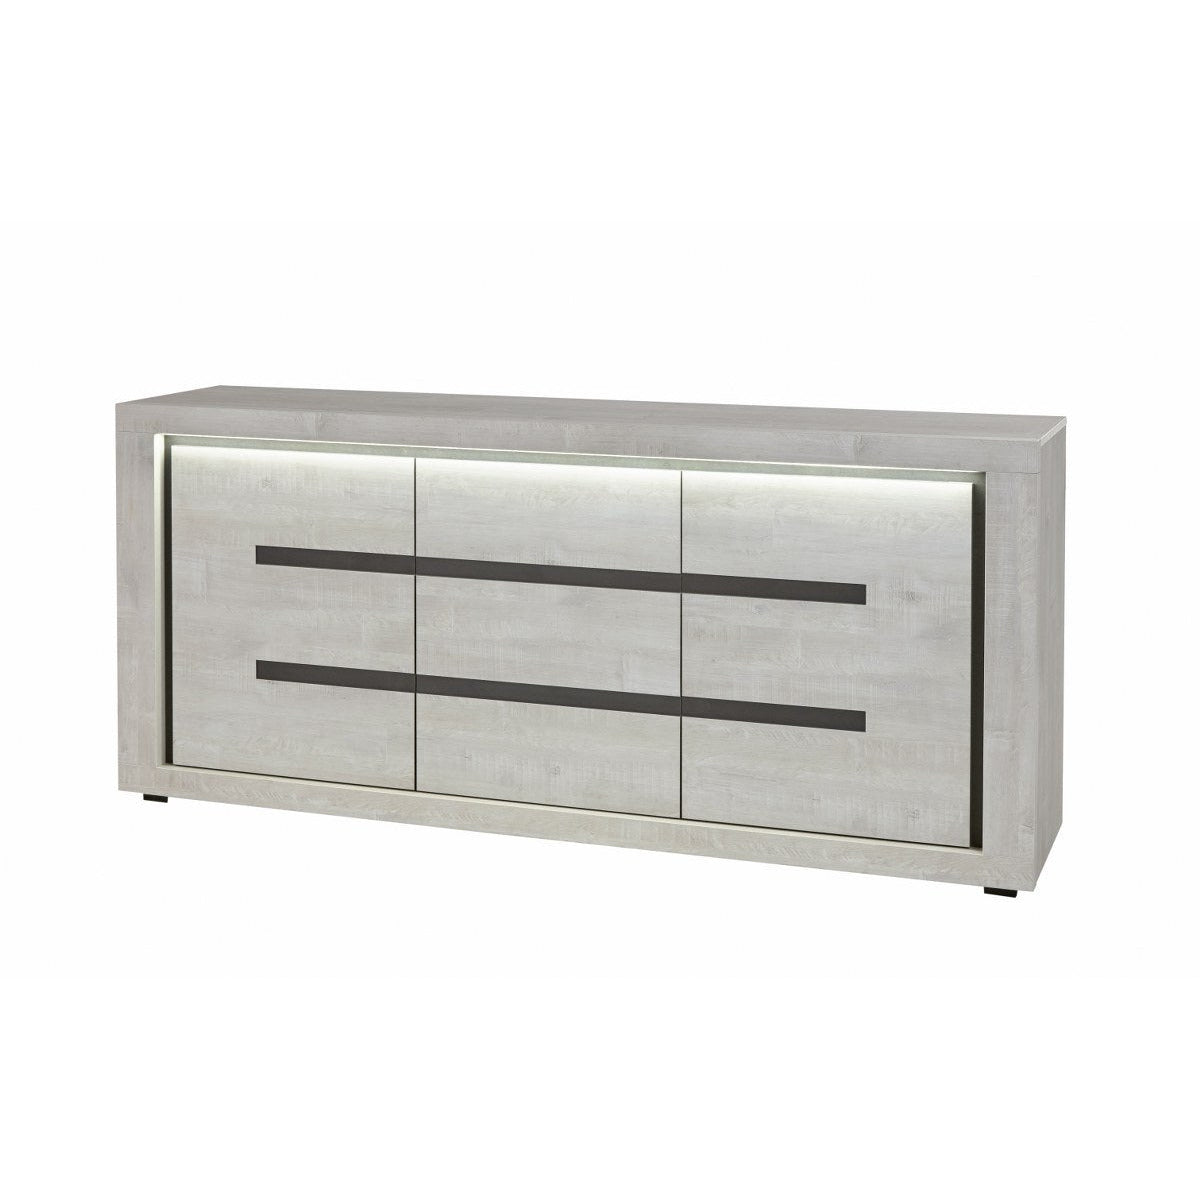 Dresser | Furniture series Vento | light gray, natural | 225x